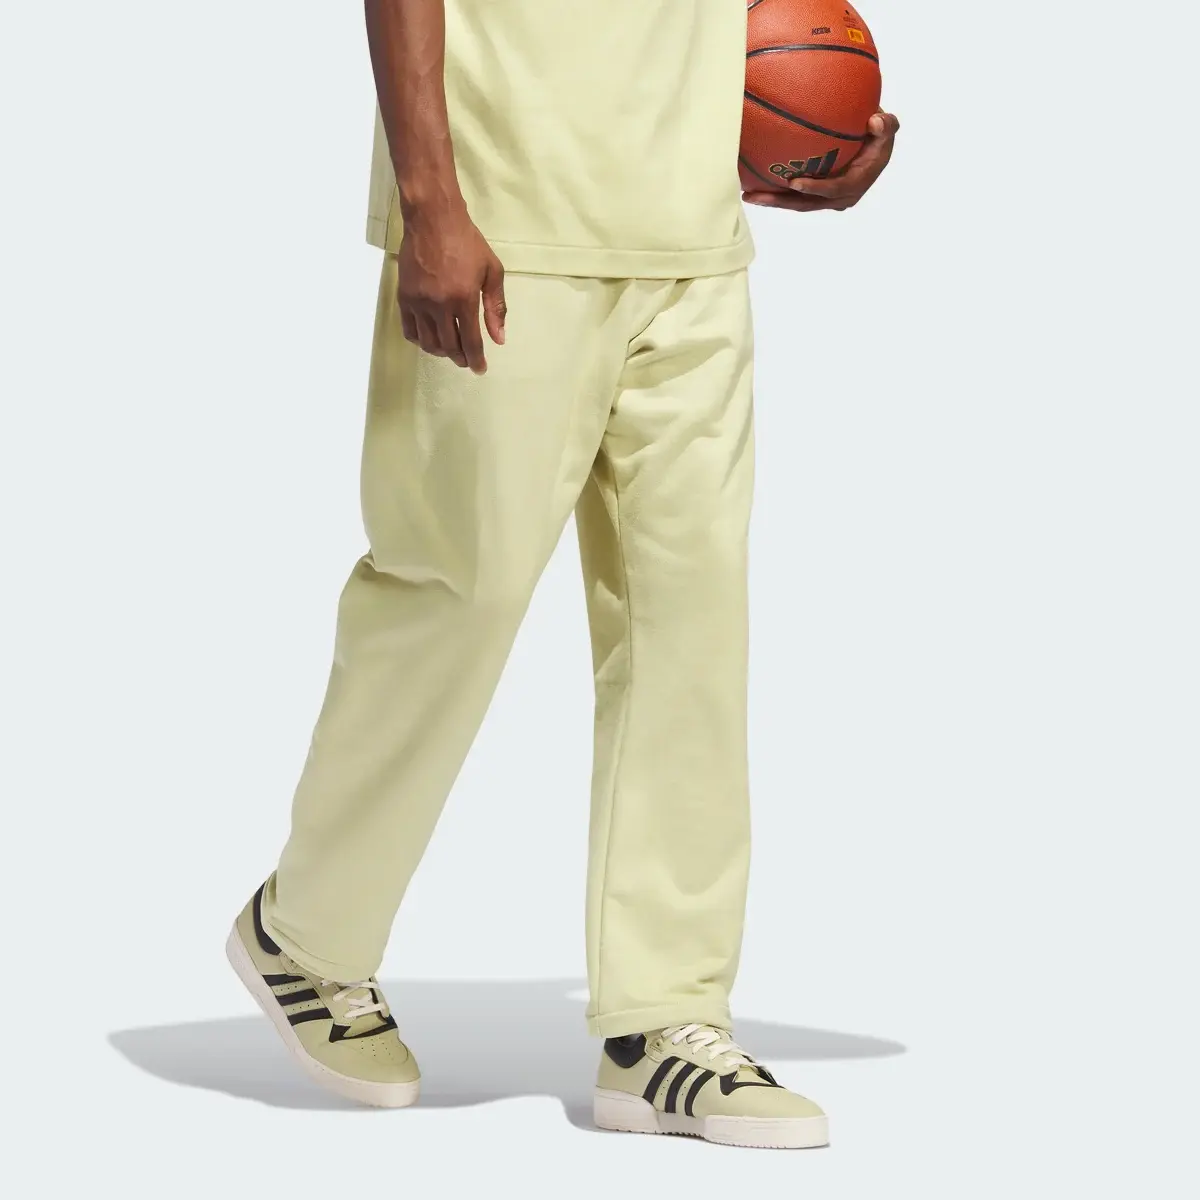 Adidas Basketball Sueded Hose. 3